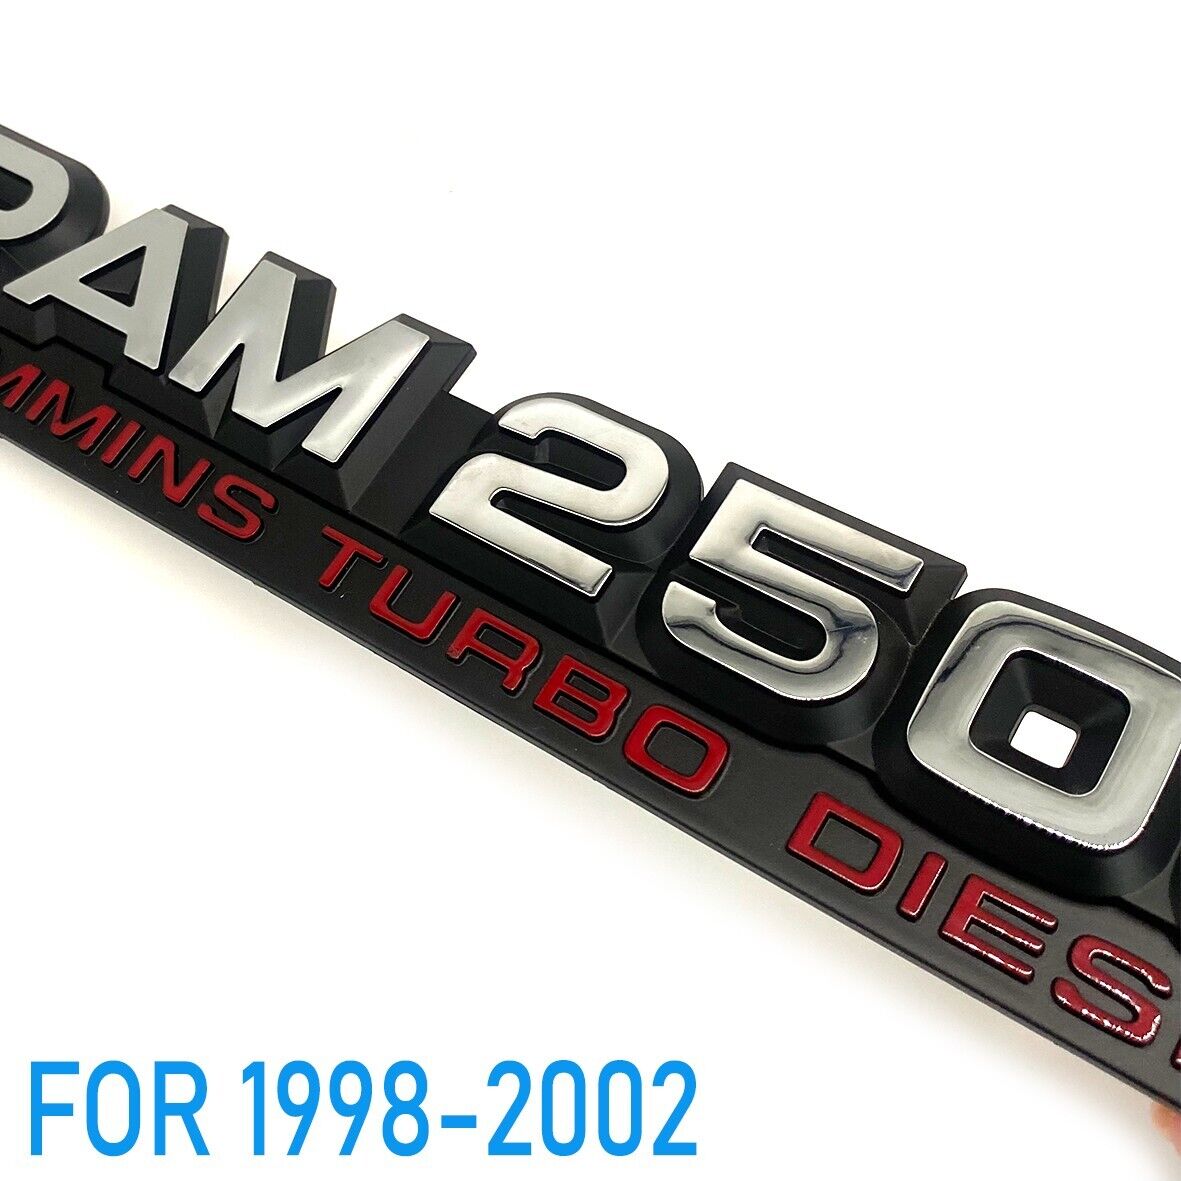 1X For Ram 2500 1998-2002 Cummins Turbo Diesel Emblems Nameplate Badges Sticker